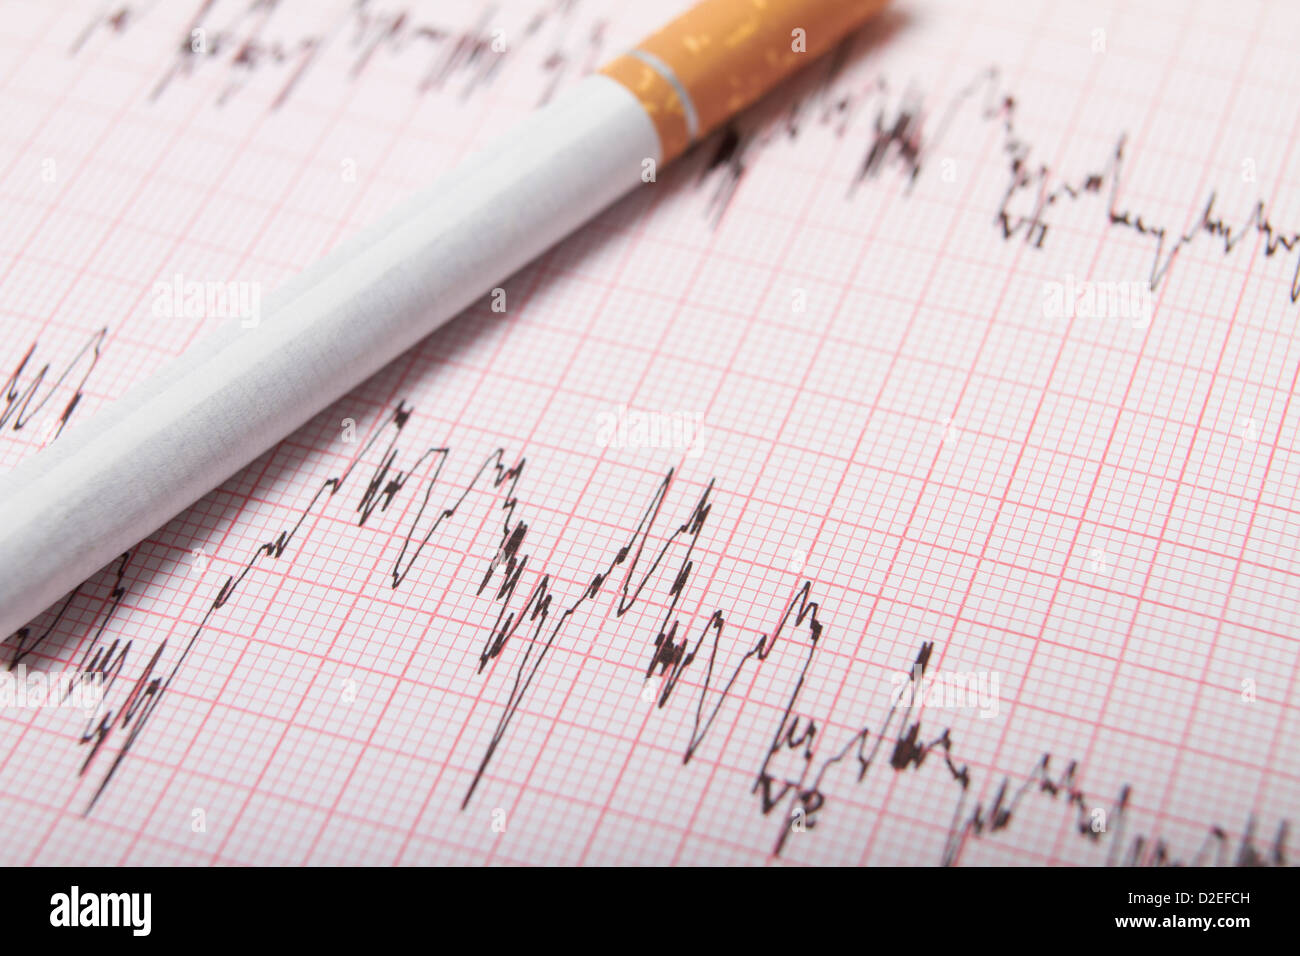 Zigarette auf EKG-Ausdruck Stockfoto